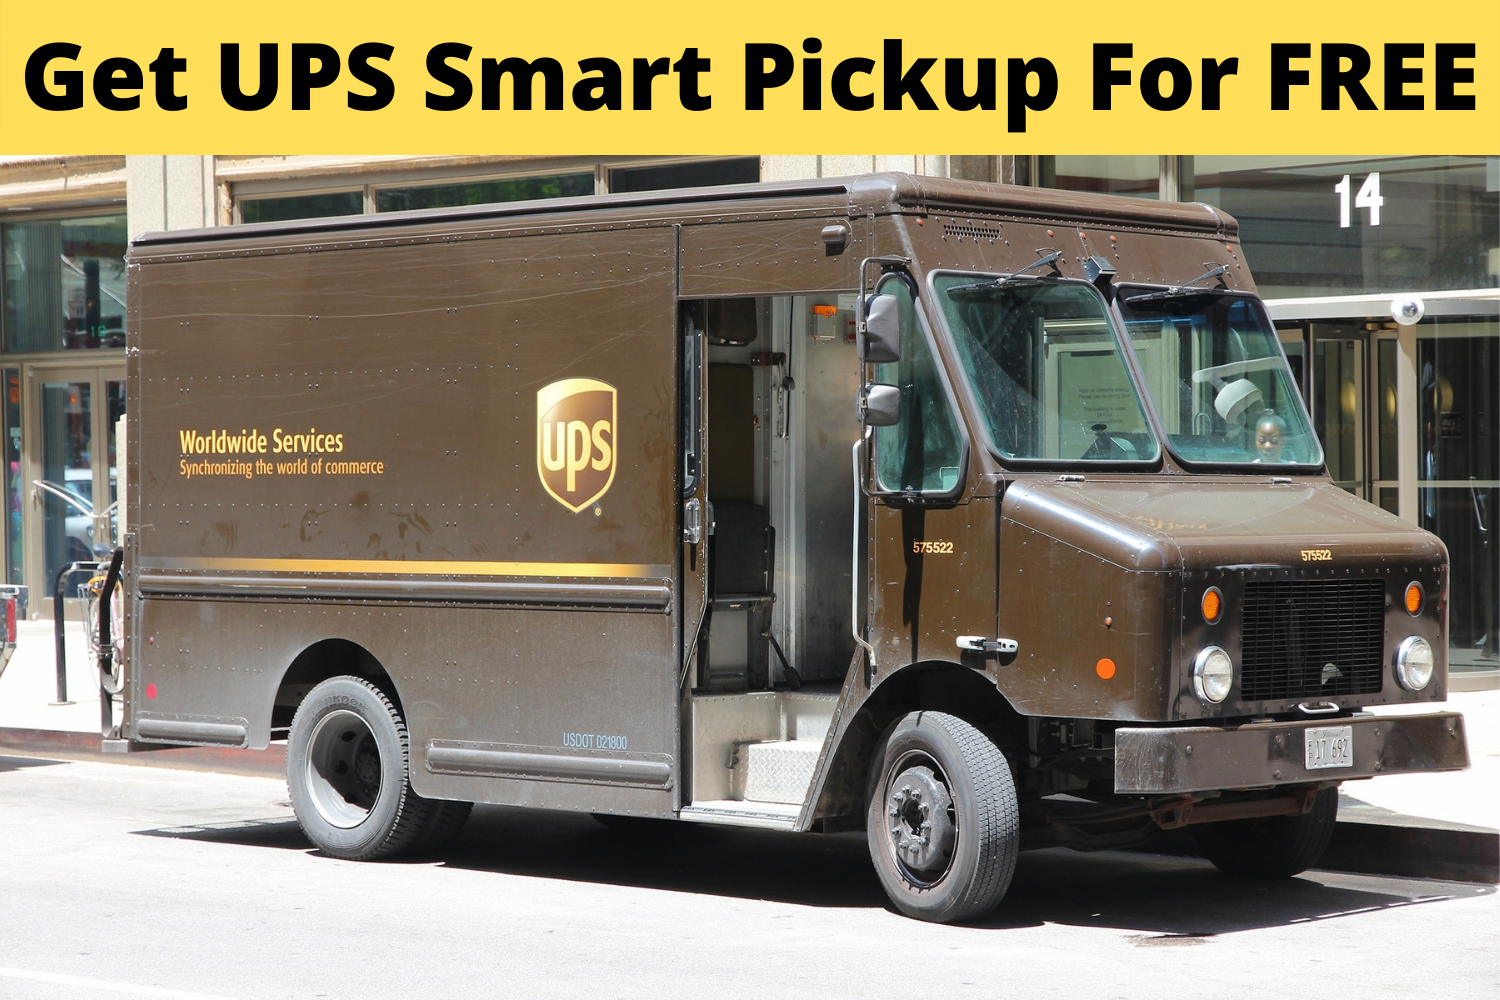 Get UPS Smart Pickup For FREE